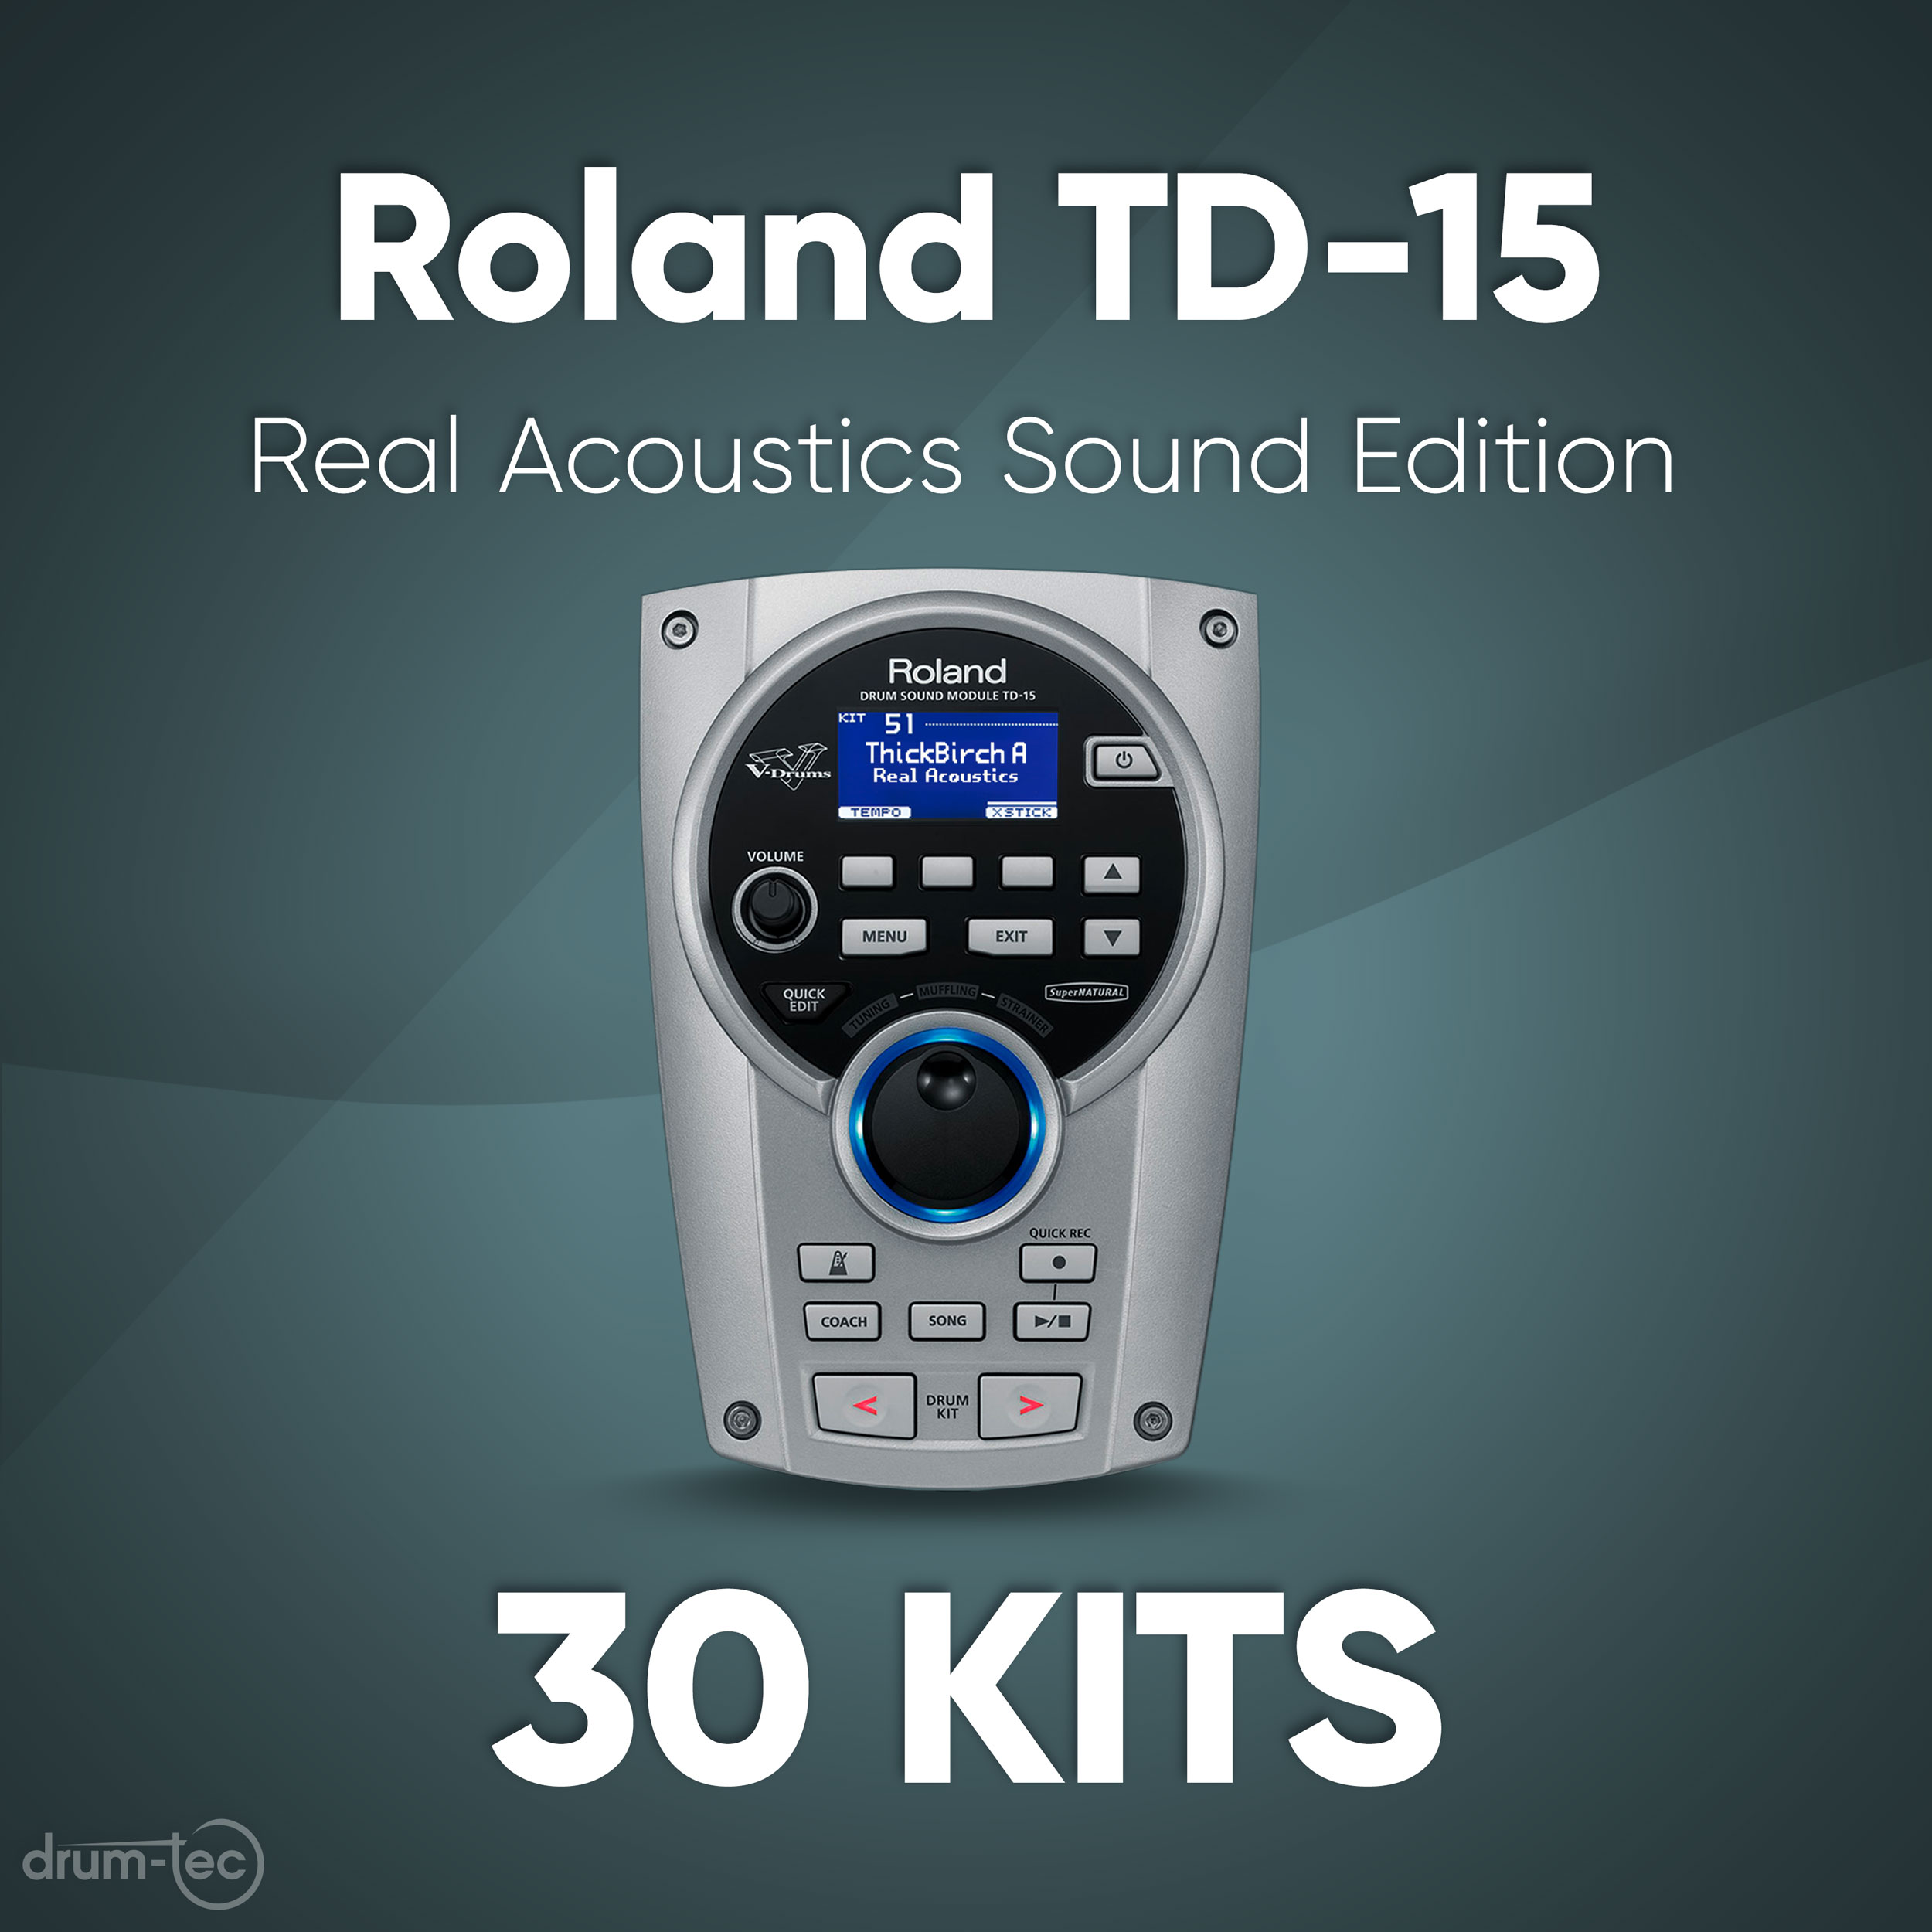 Privilege Mover Arthur Real Acoustics Sound Edition Roland TD-15 [Download] | drum-tec